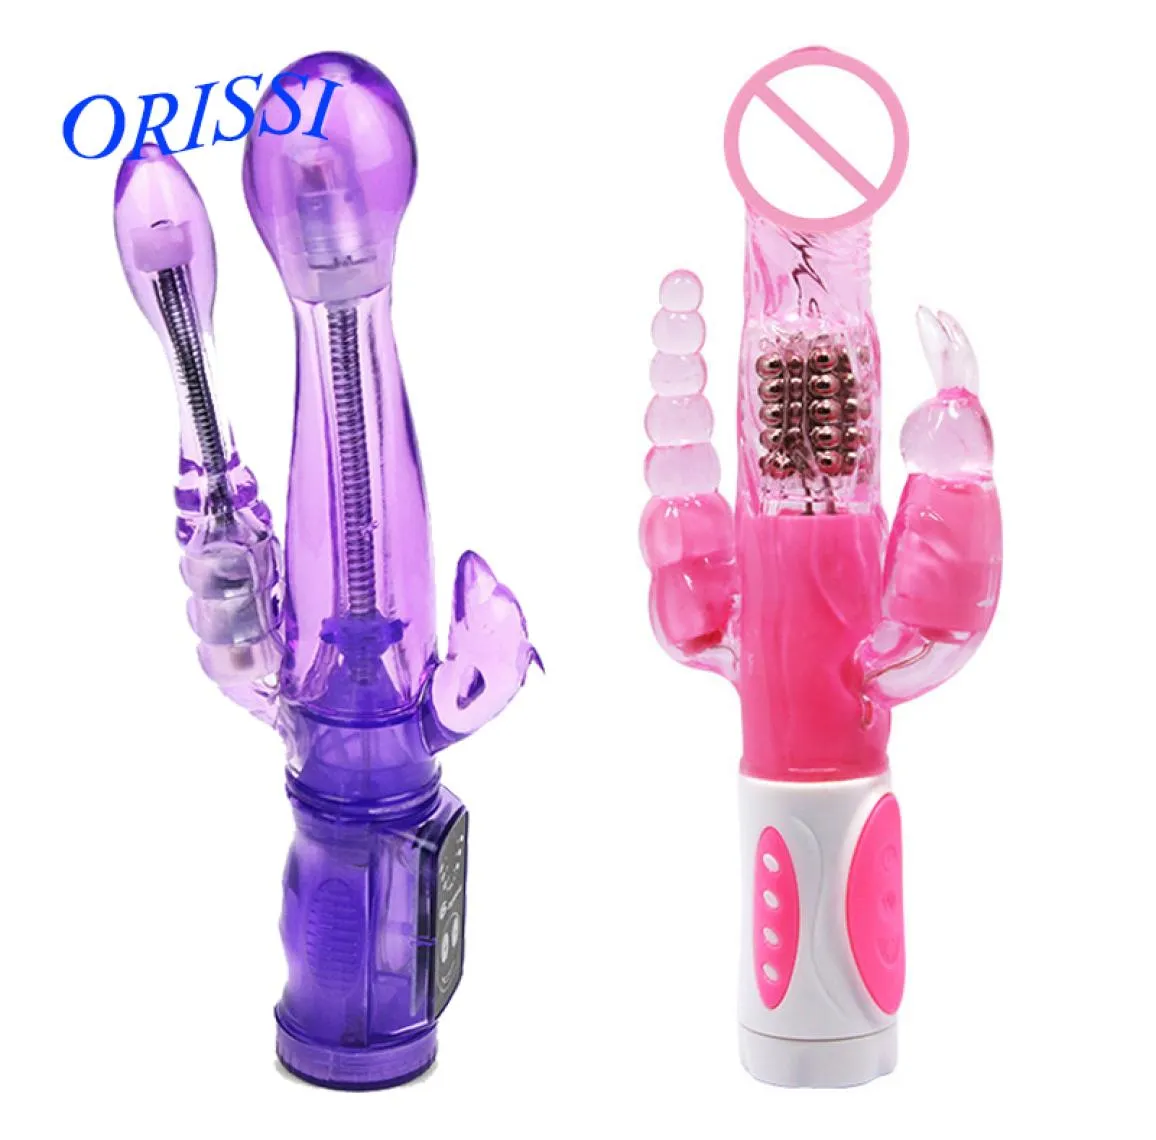 ORISSI Bunny Triple Pleasure Rabbit Vibrator G-Punkt Klitoris Stimulator Anal Plug Rotation Dildo Vibrator Sexspielzeug für Frau Y18102993456